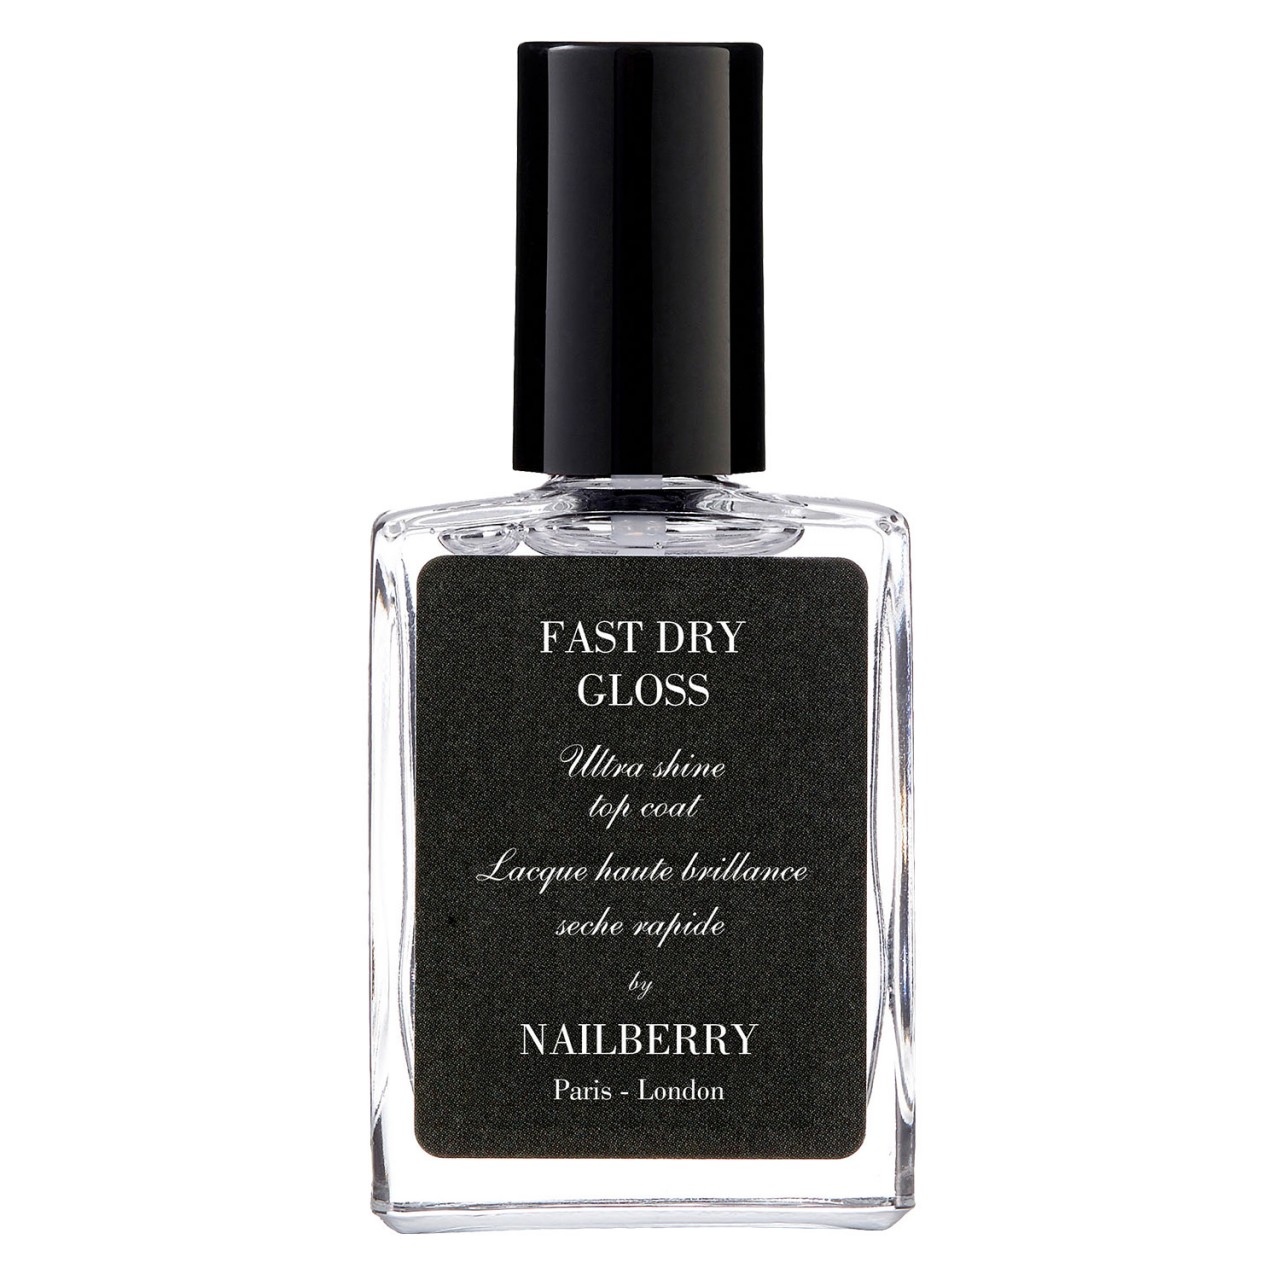 L'oxygéné Nail Care - Fast Dry Gloss von Nailberry